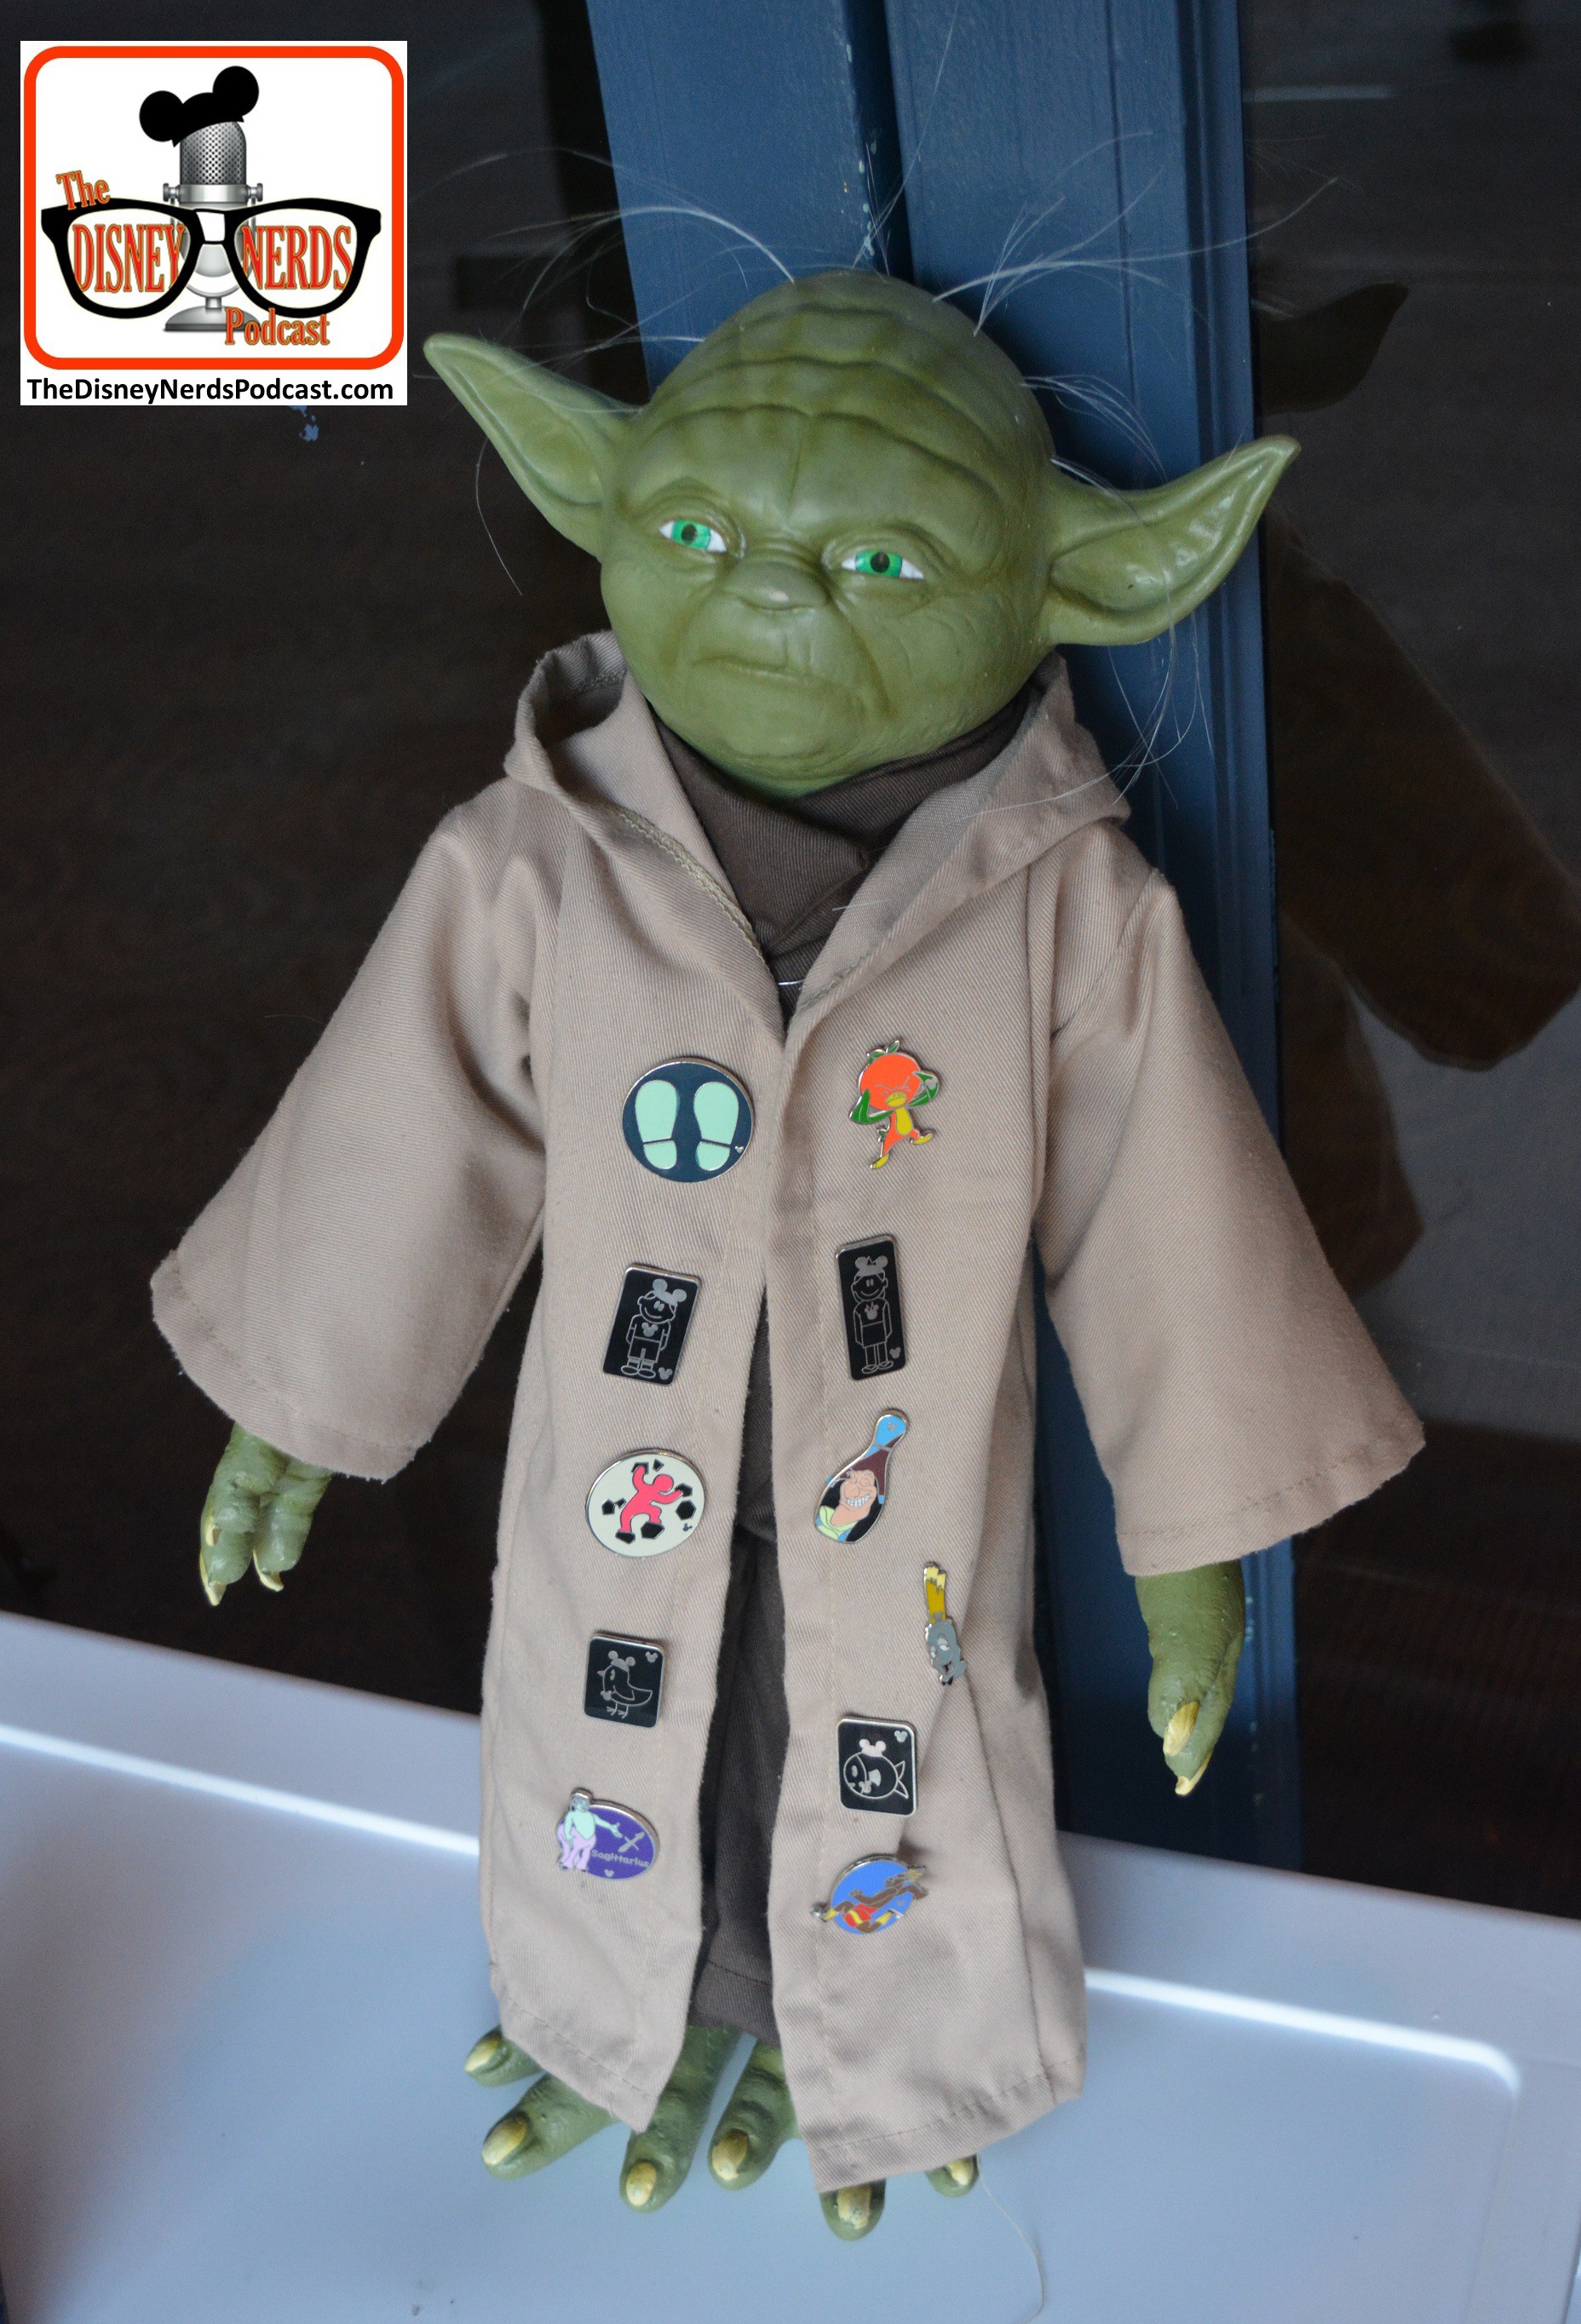 2015-12 - Hollywood Studios - Trade pins with Yoda you will